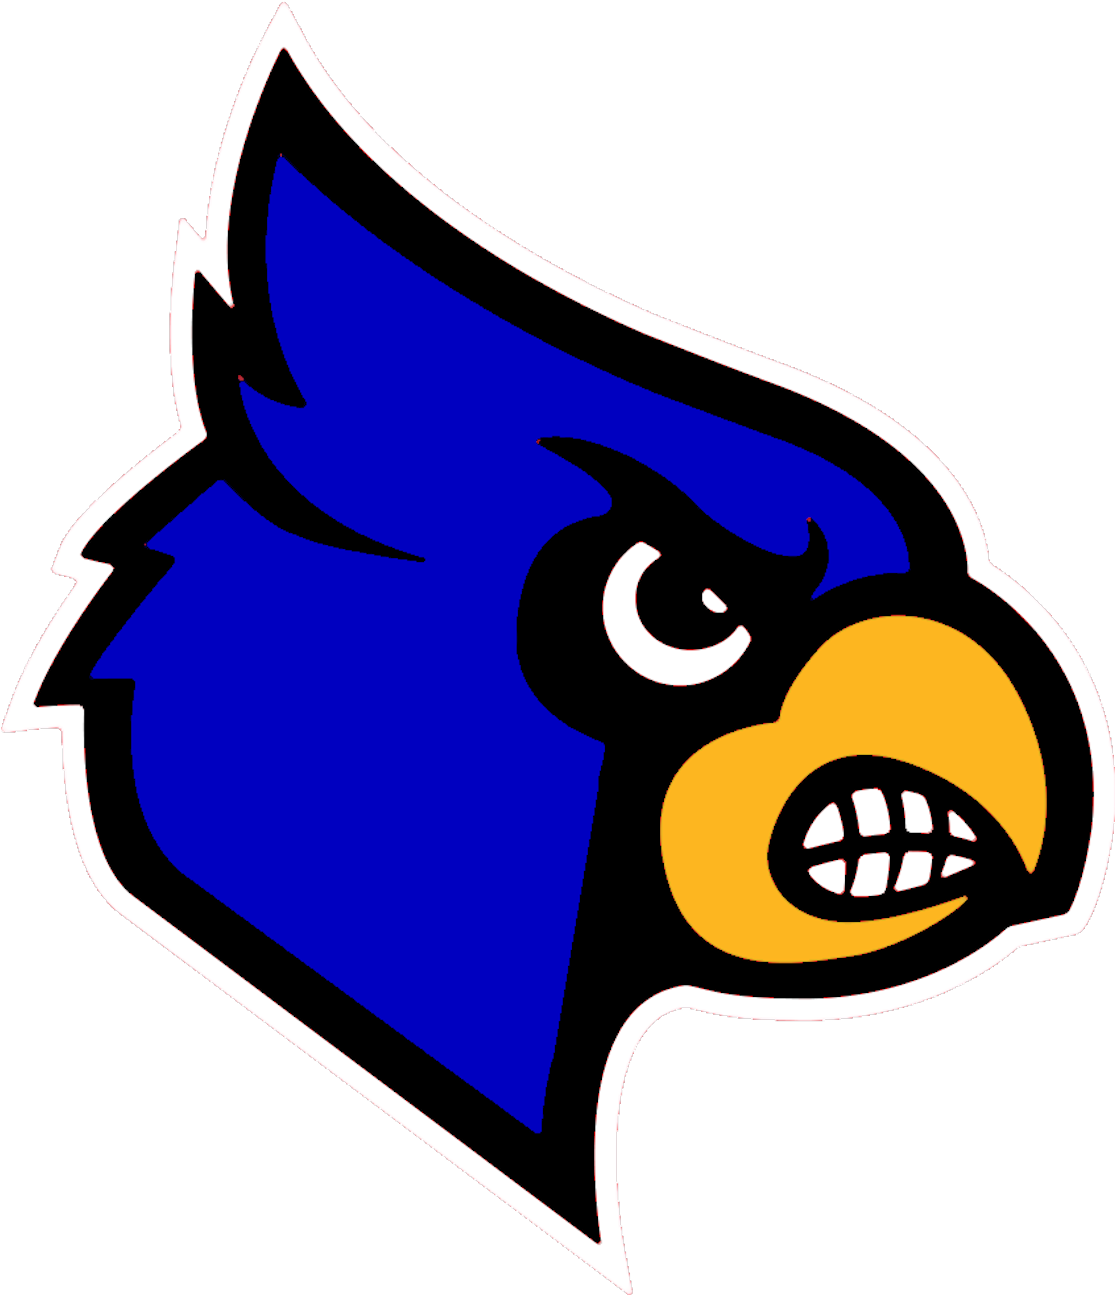 Blue Cardinals Image - University Of Louisville Basketball Logo (1136x1314)